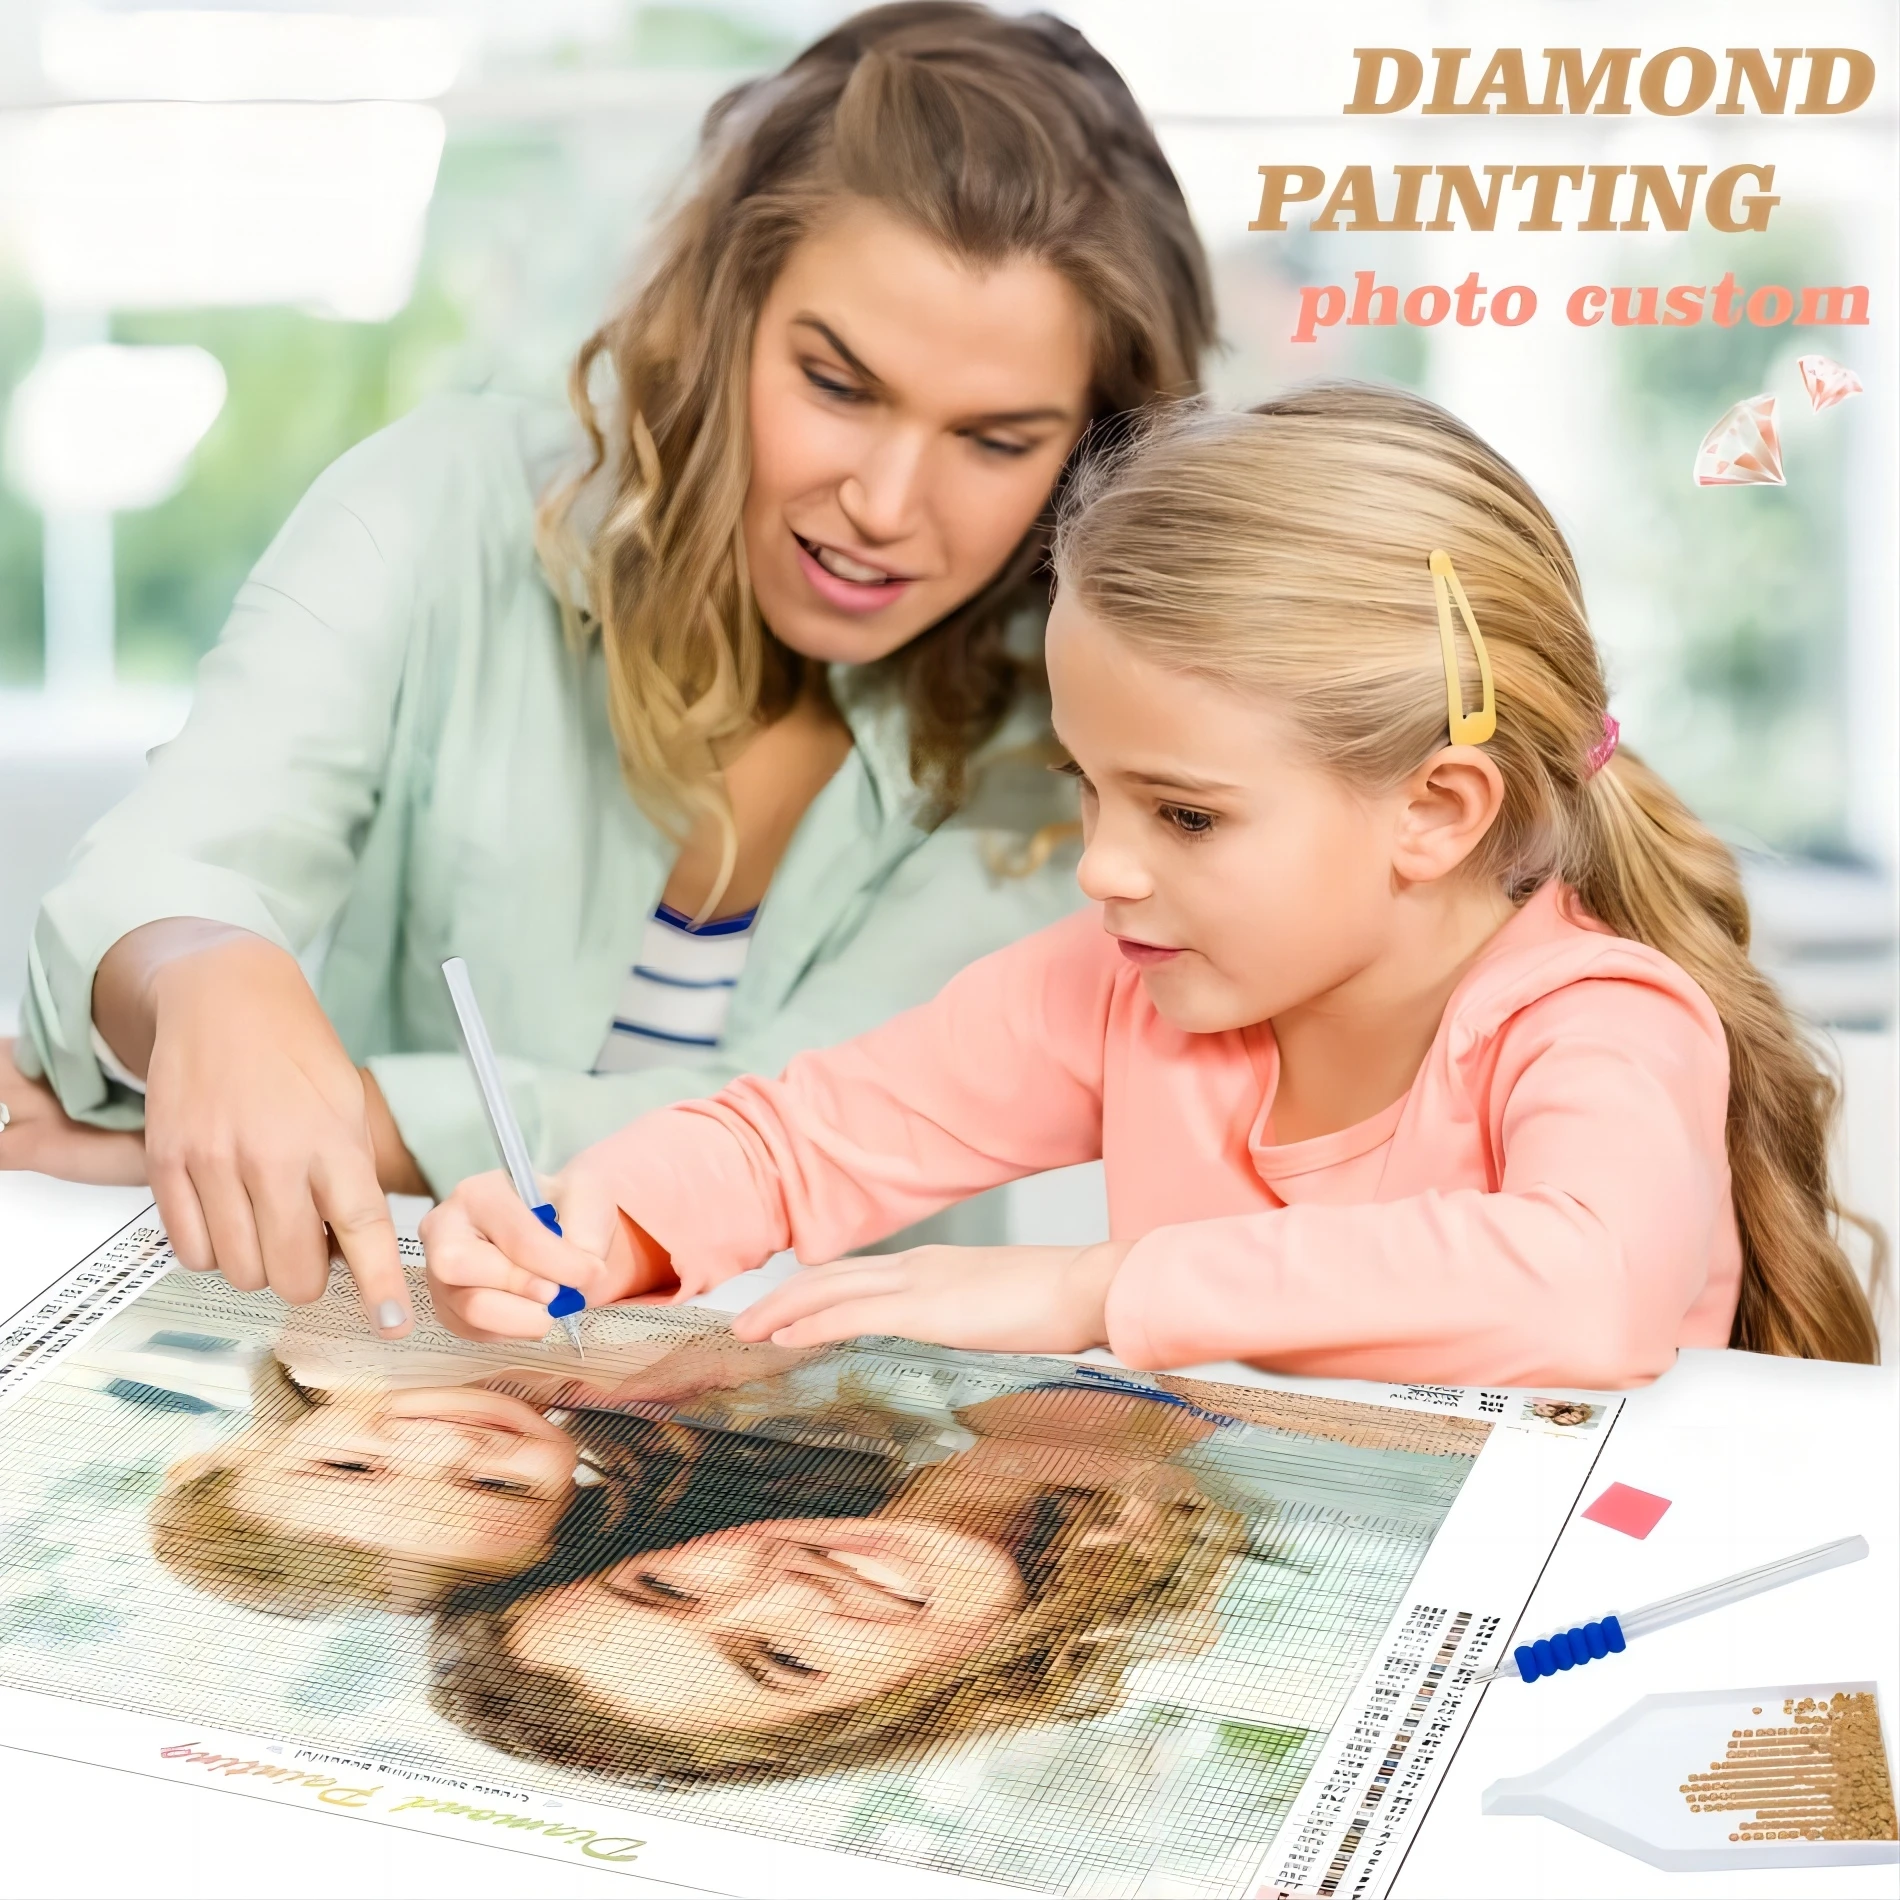 RUOPOTY DIY Photo Custom Diamond Painting Picture Of Rhinestones Diamond Embroidery Cross Stitch Beadwork Gift Home Decor